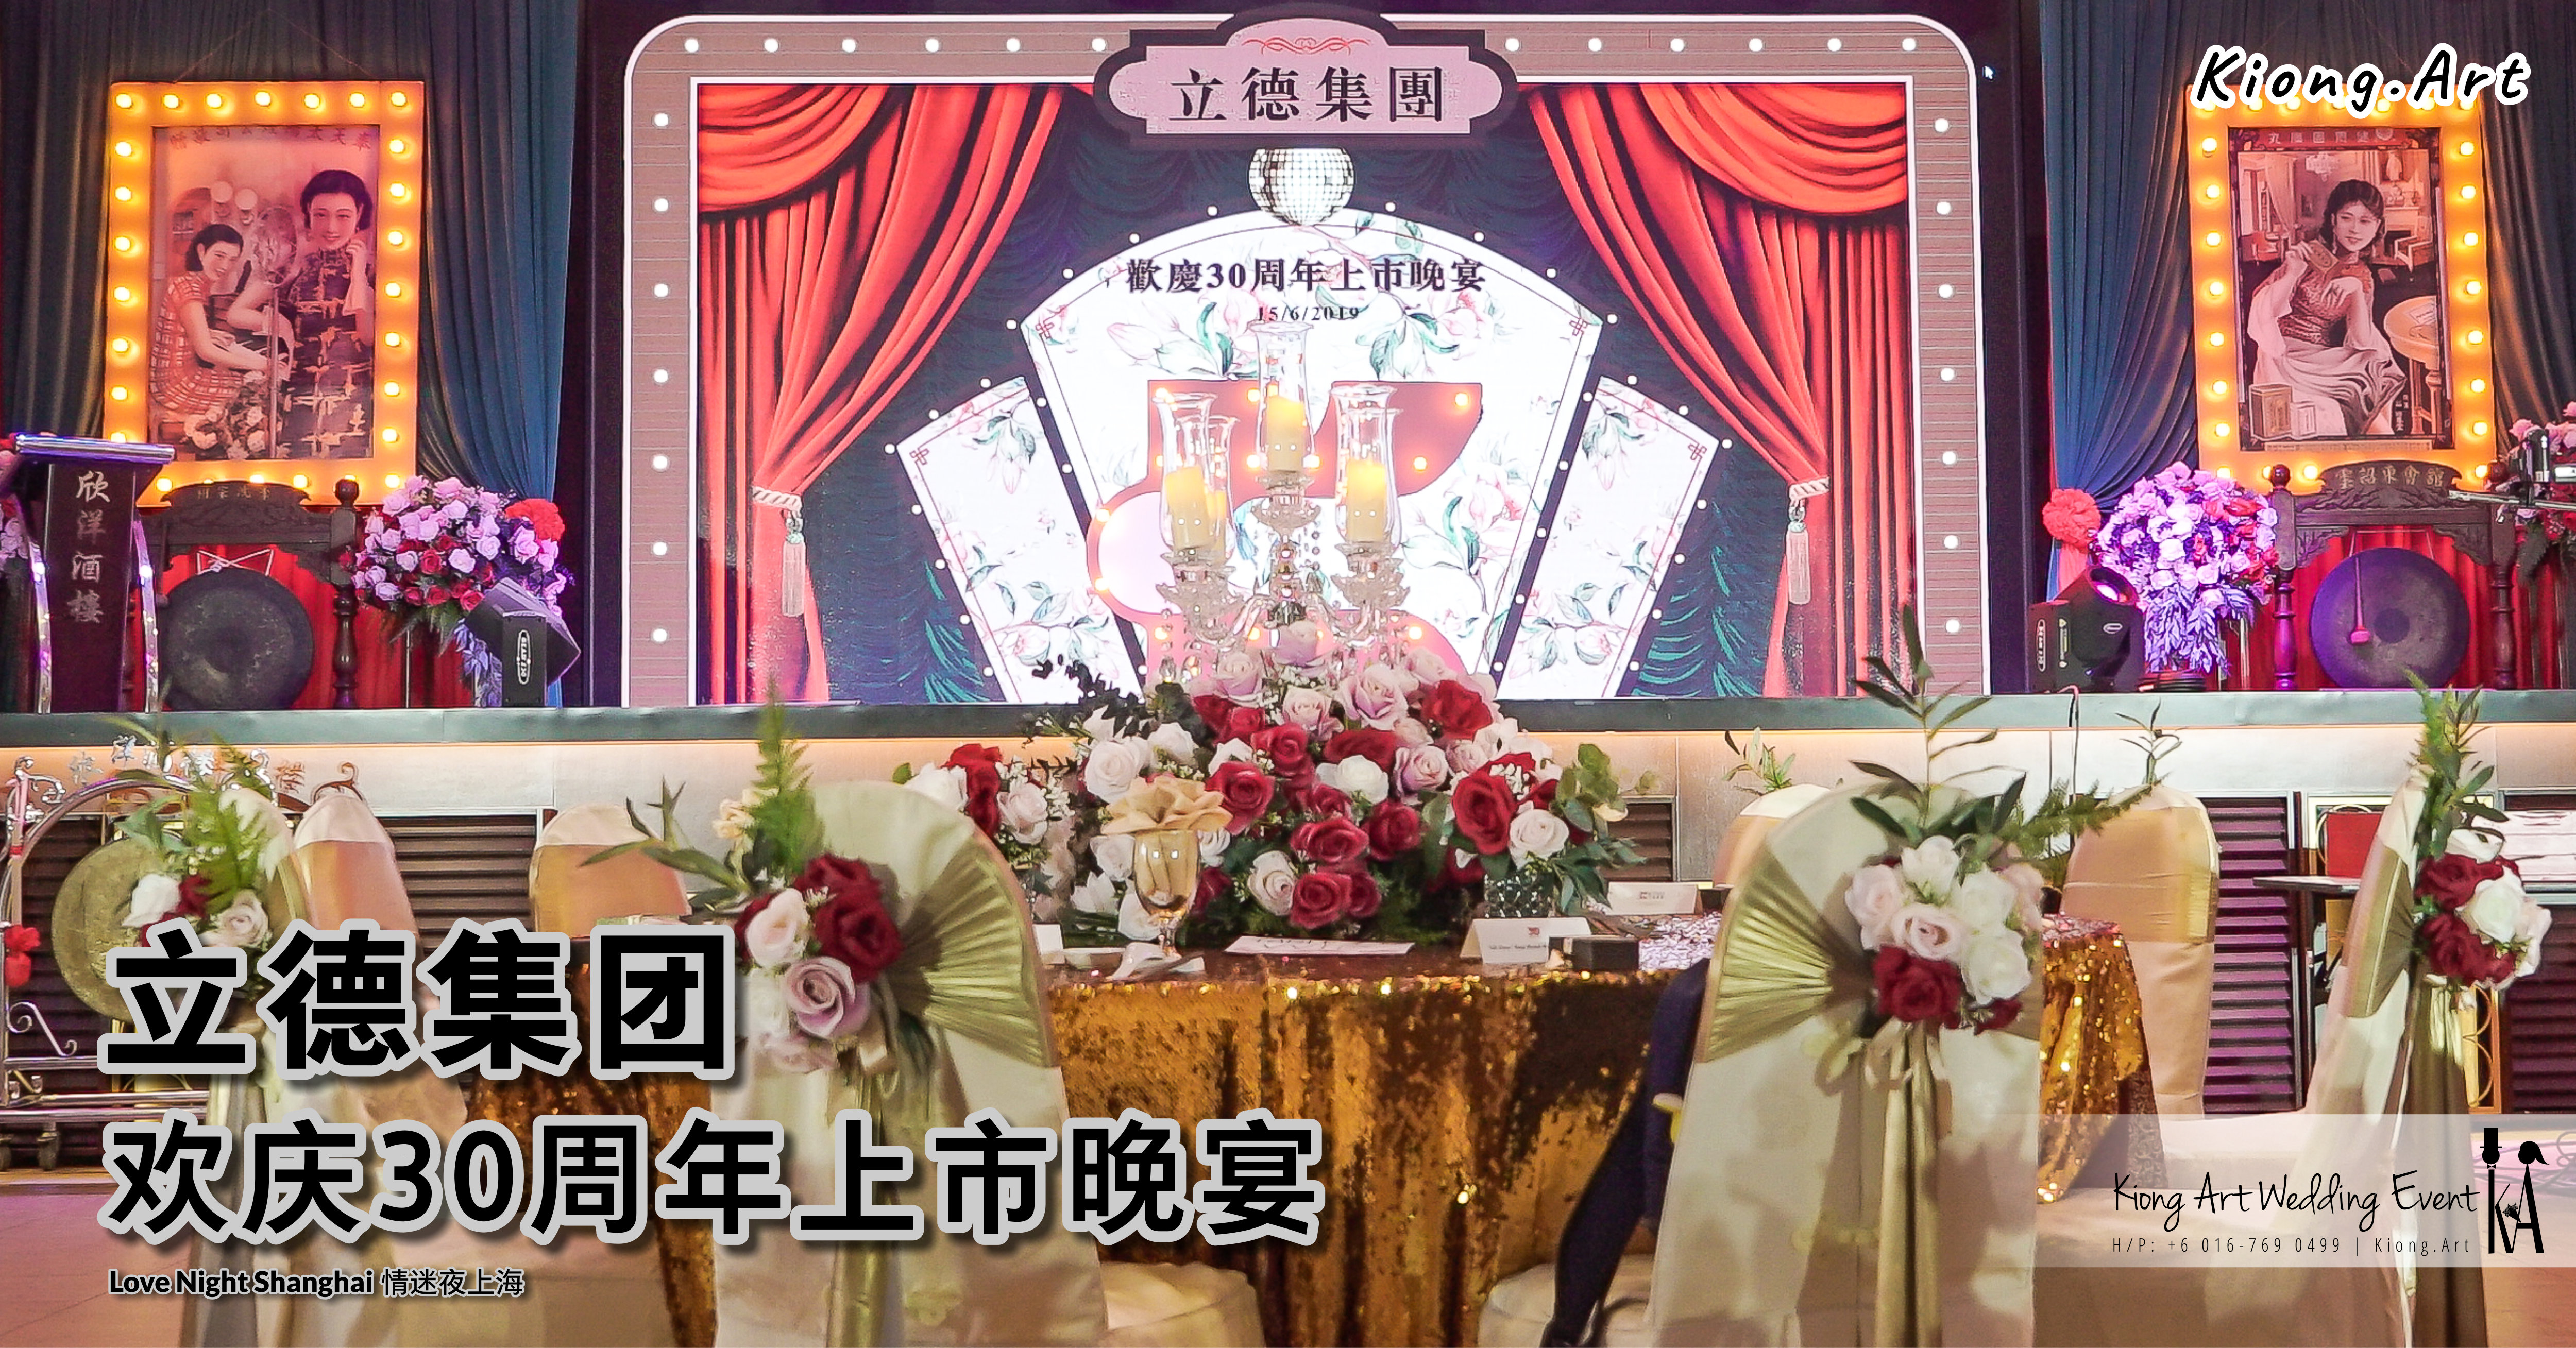 Love Night Shanghai 情迷夜上海 @ 15 Jun 2019 | KTMG 立德集团 欢庆30周年上市晚宴